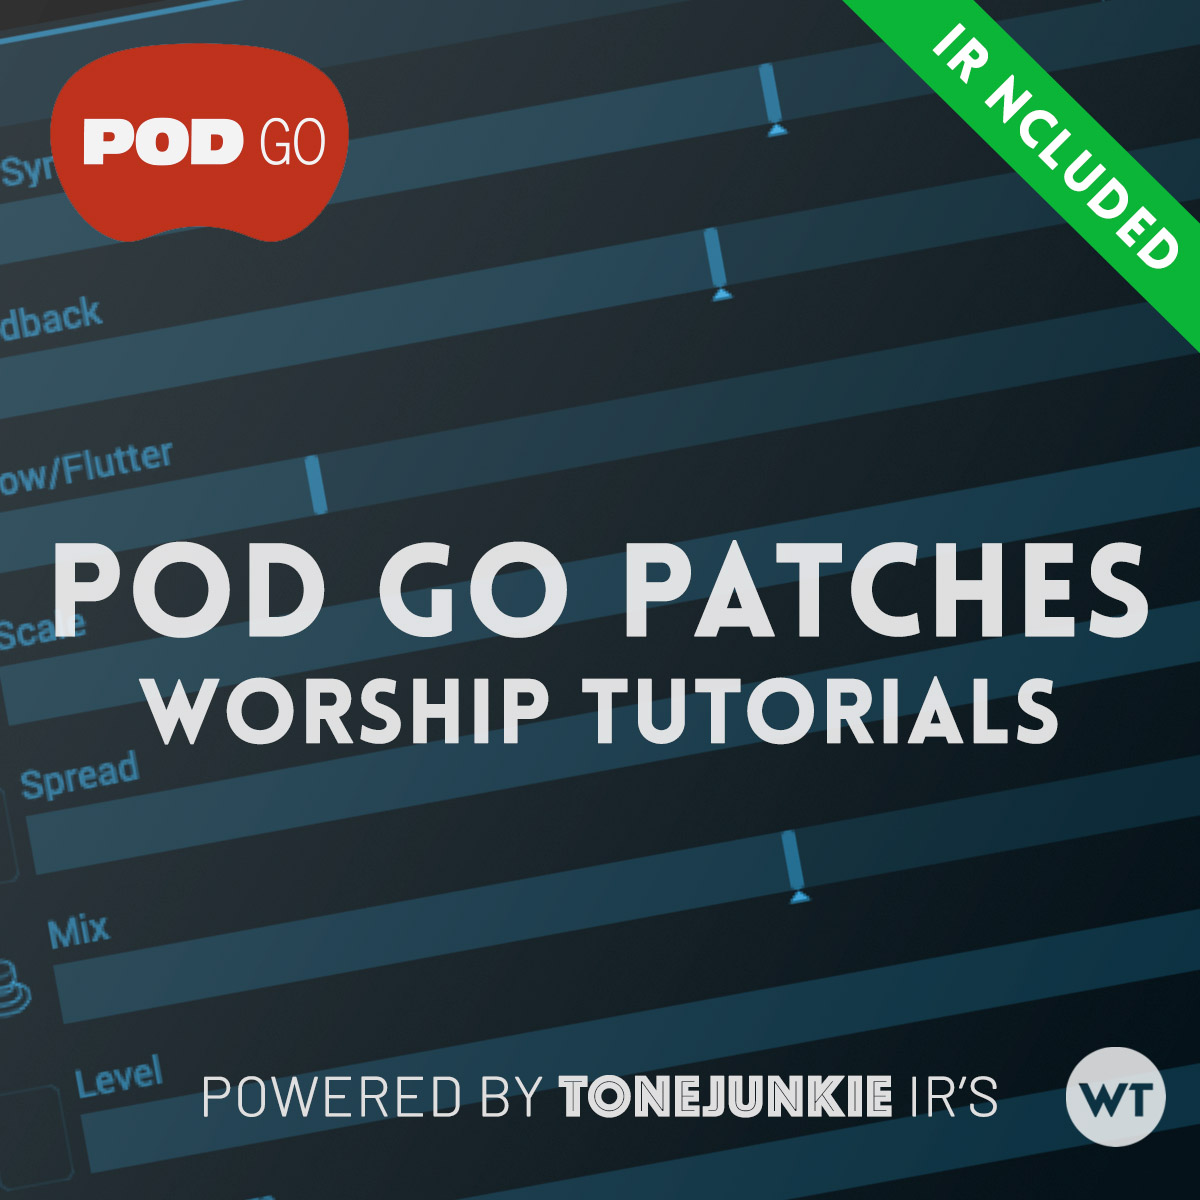 Line 6 POD Go Patches - Worship Tutorials